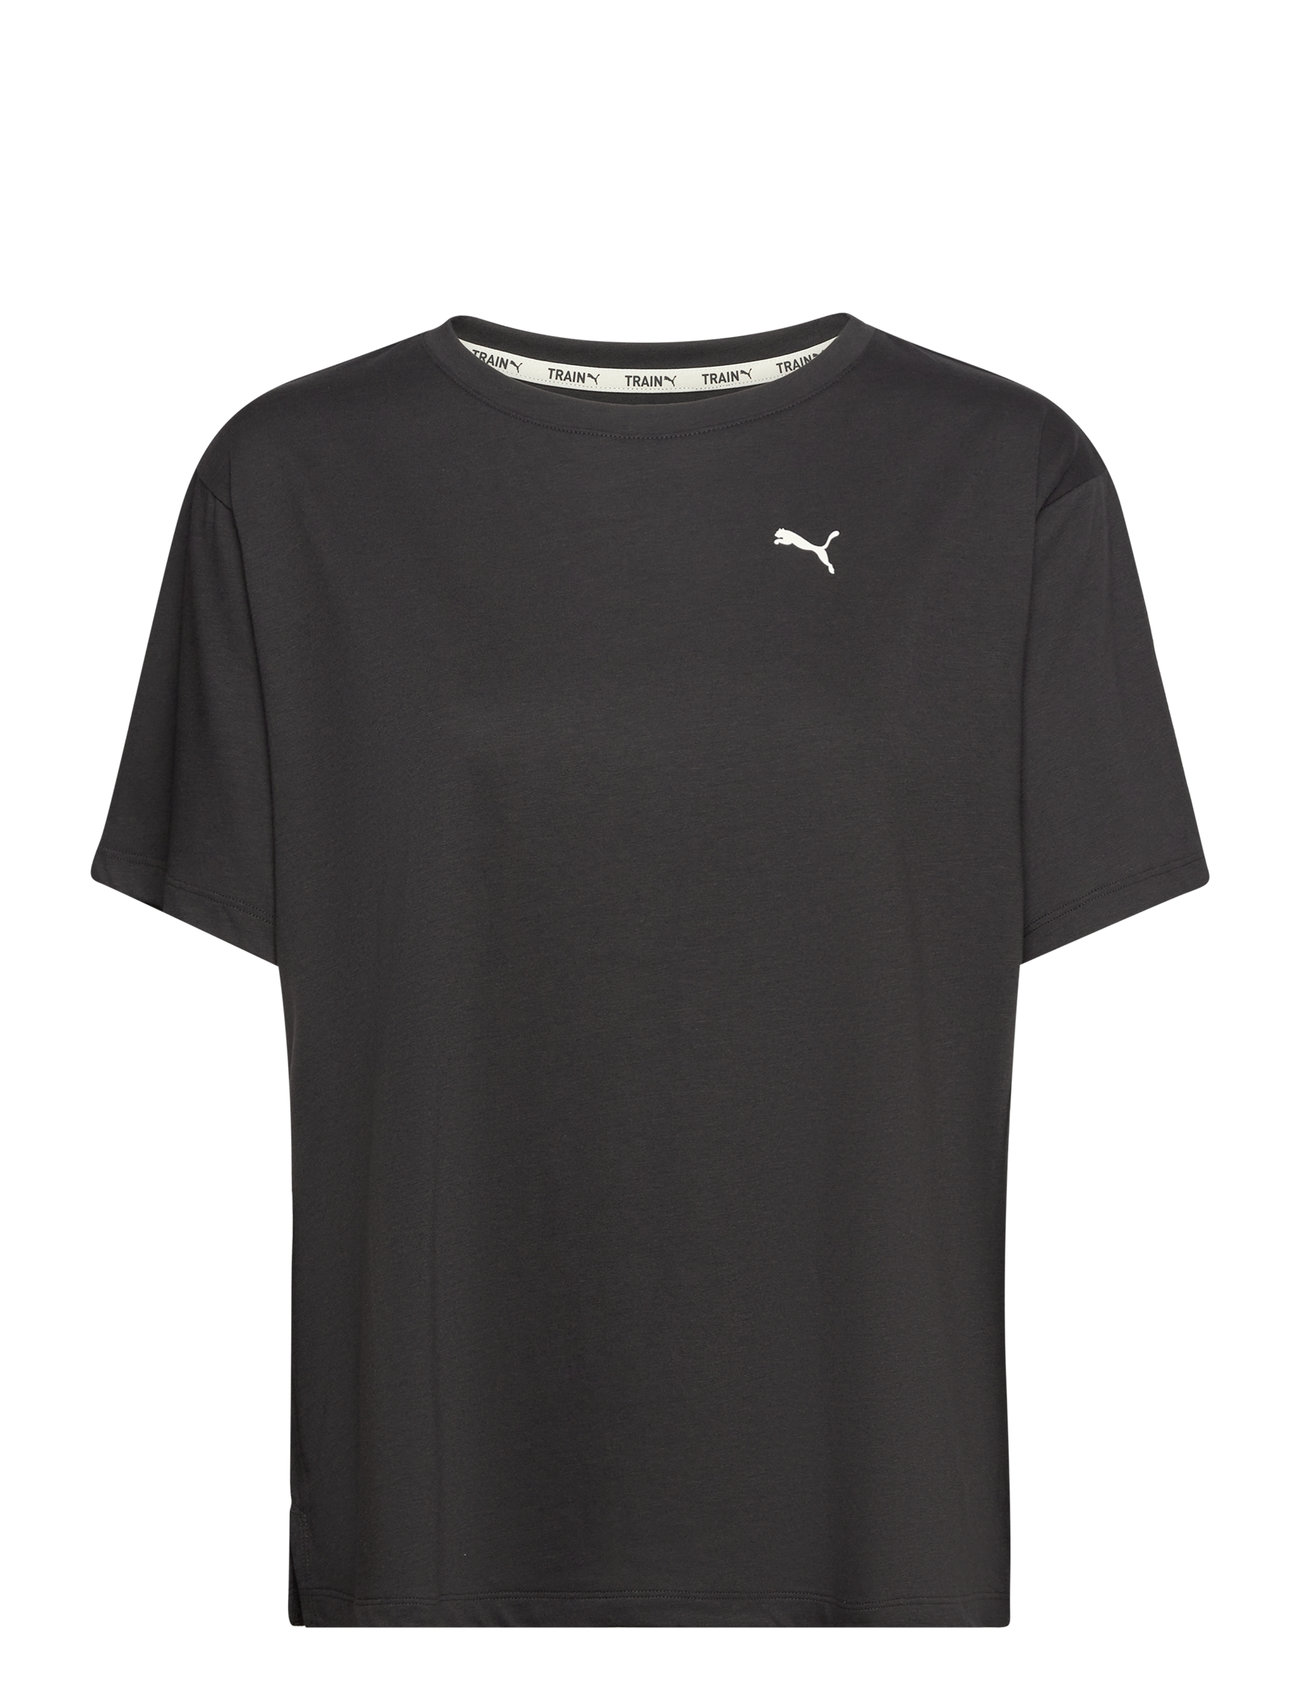 Animal Remix Boyfriend Tee Sport T-shirts & Tops Short-sleeved Black PUMA